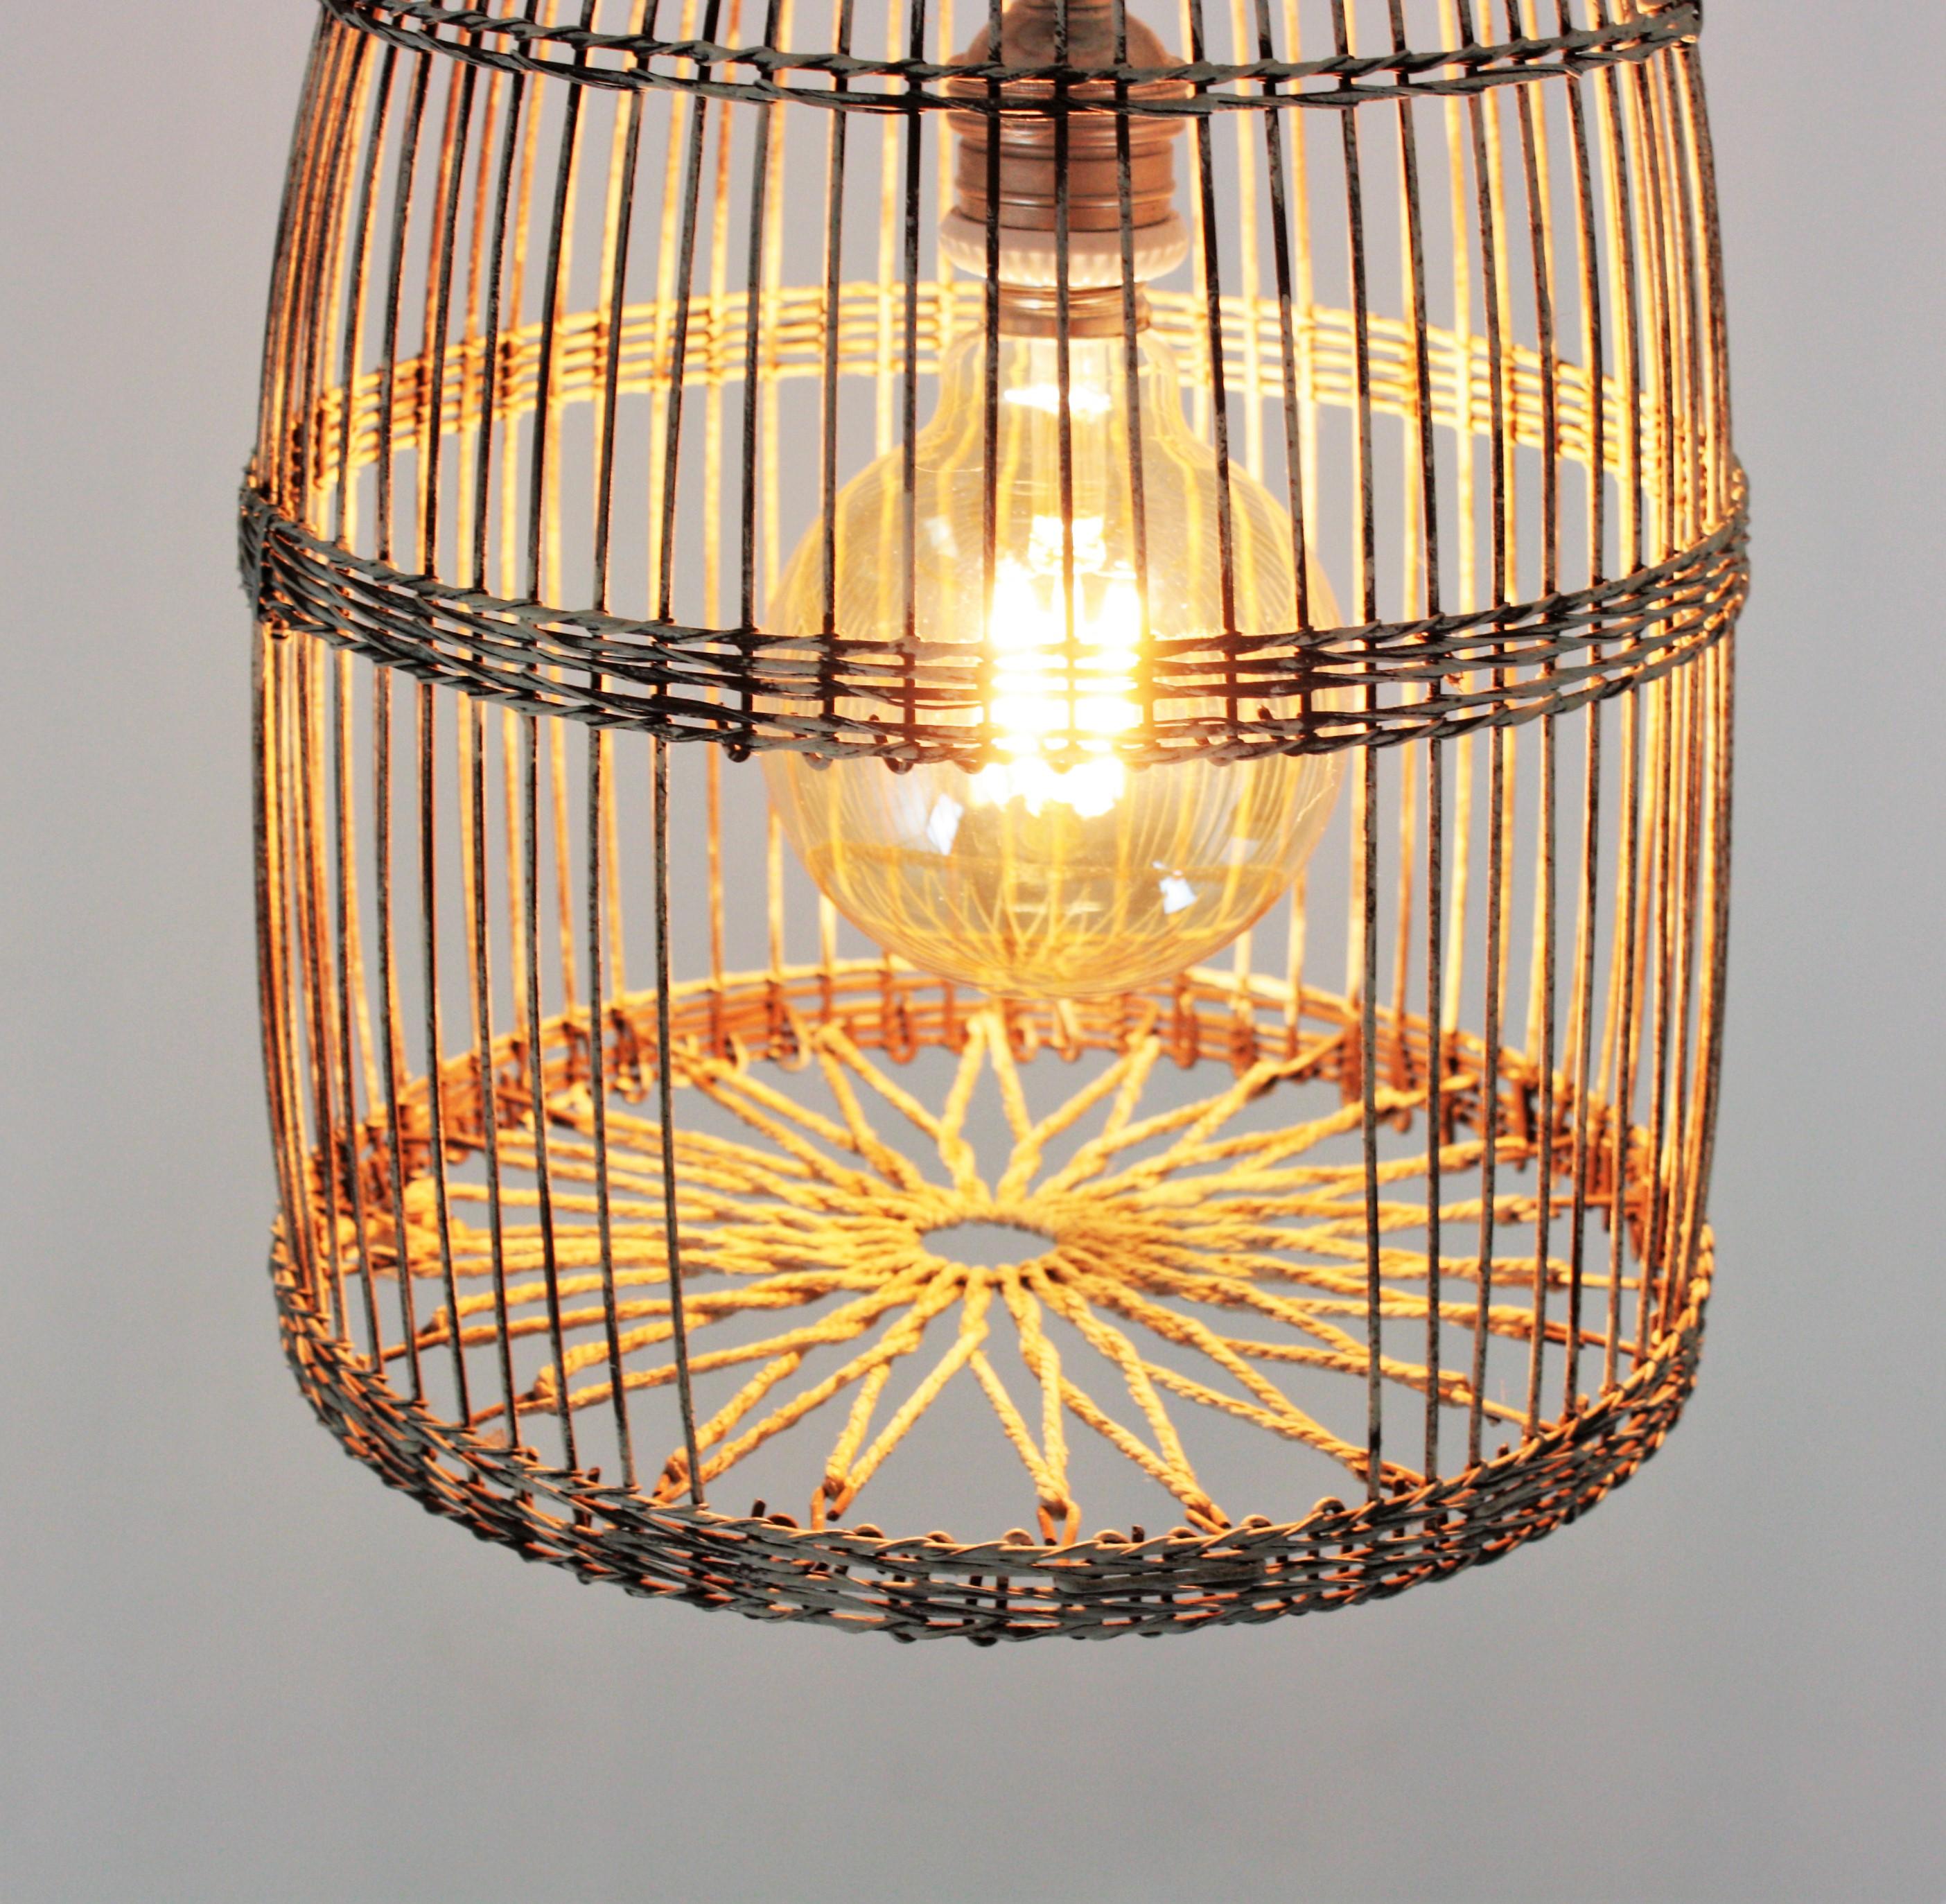 Birdcage Rustic Hanging Light Pendant Lamp 8